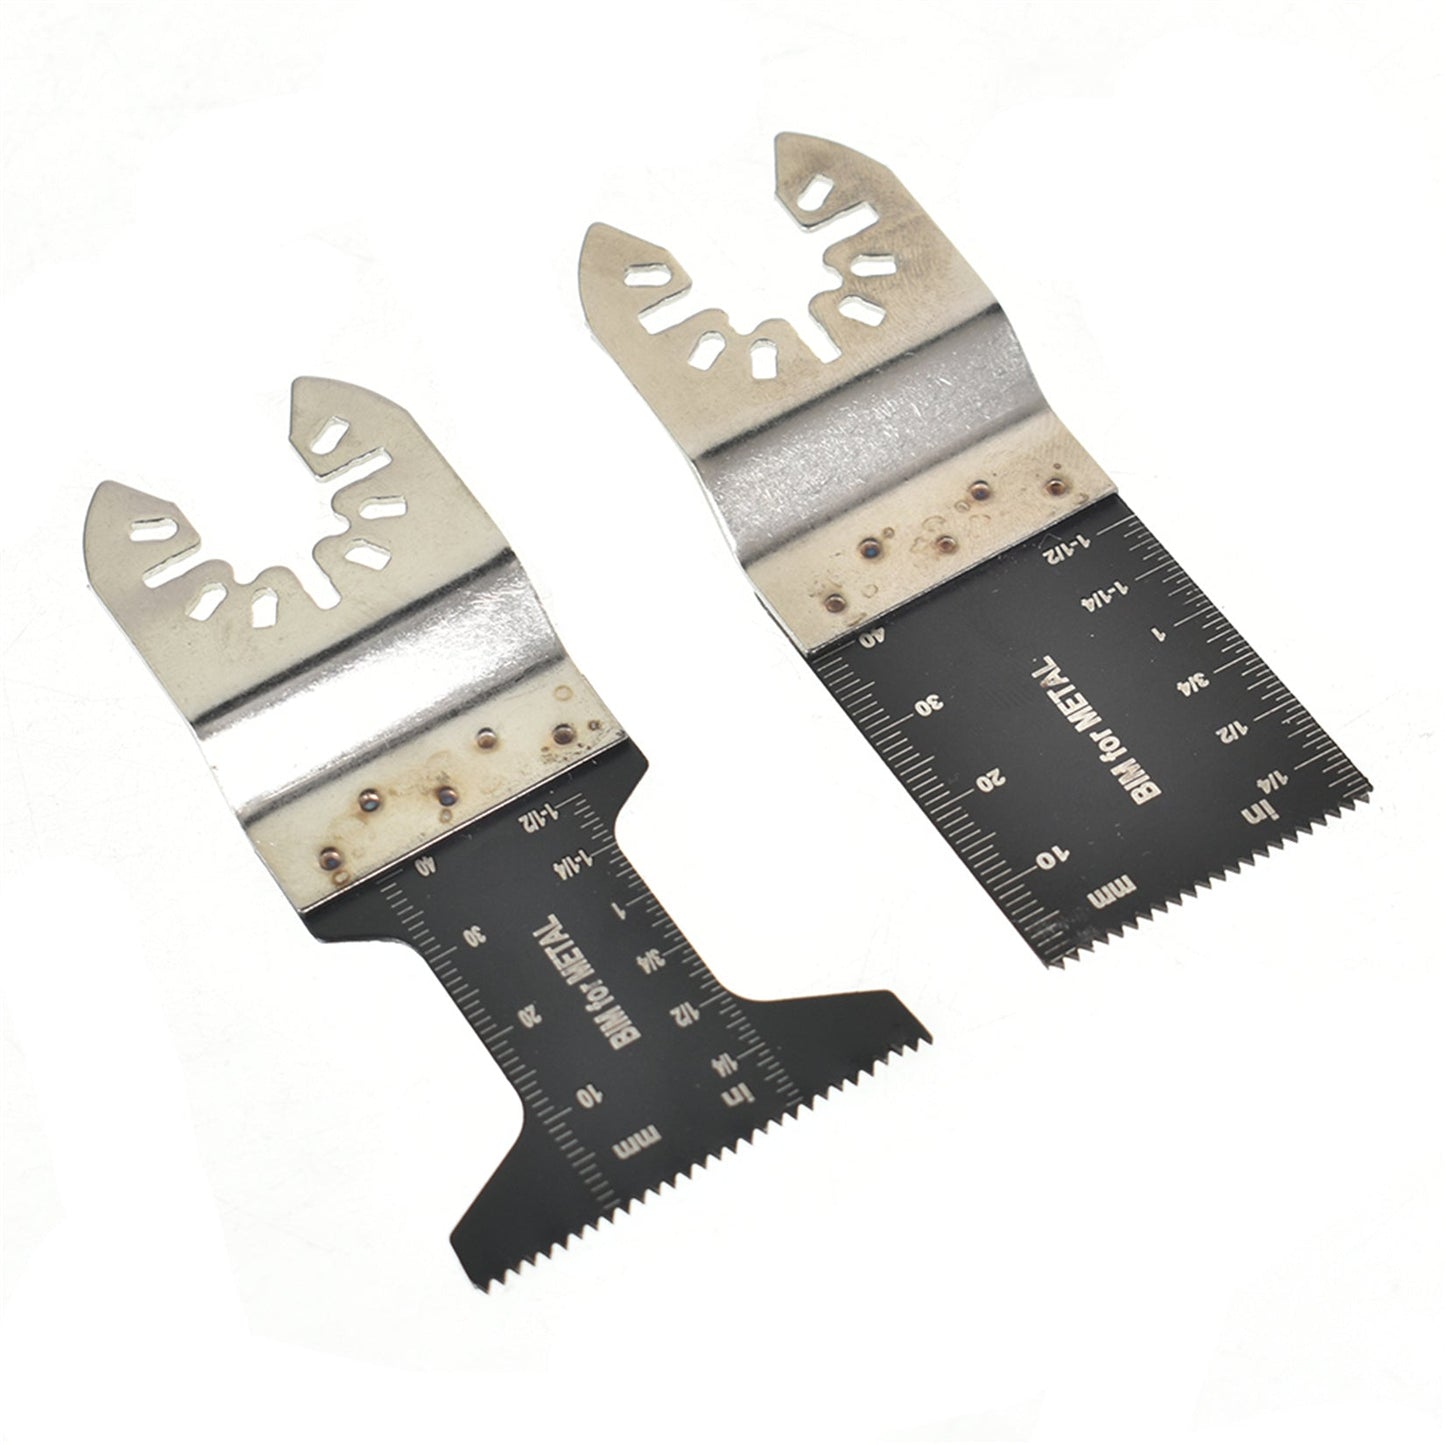 60Pcs Oscillating Saw Blade 1.75 "- 3.5" For Cutting Wood Plastic Soft Metal FINDMALLPARTS